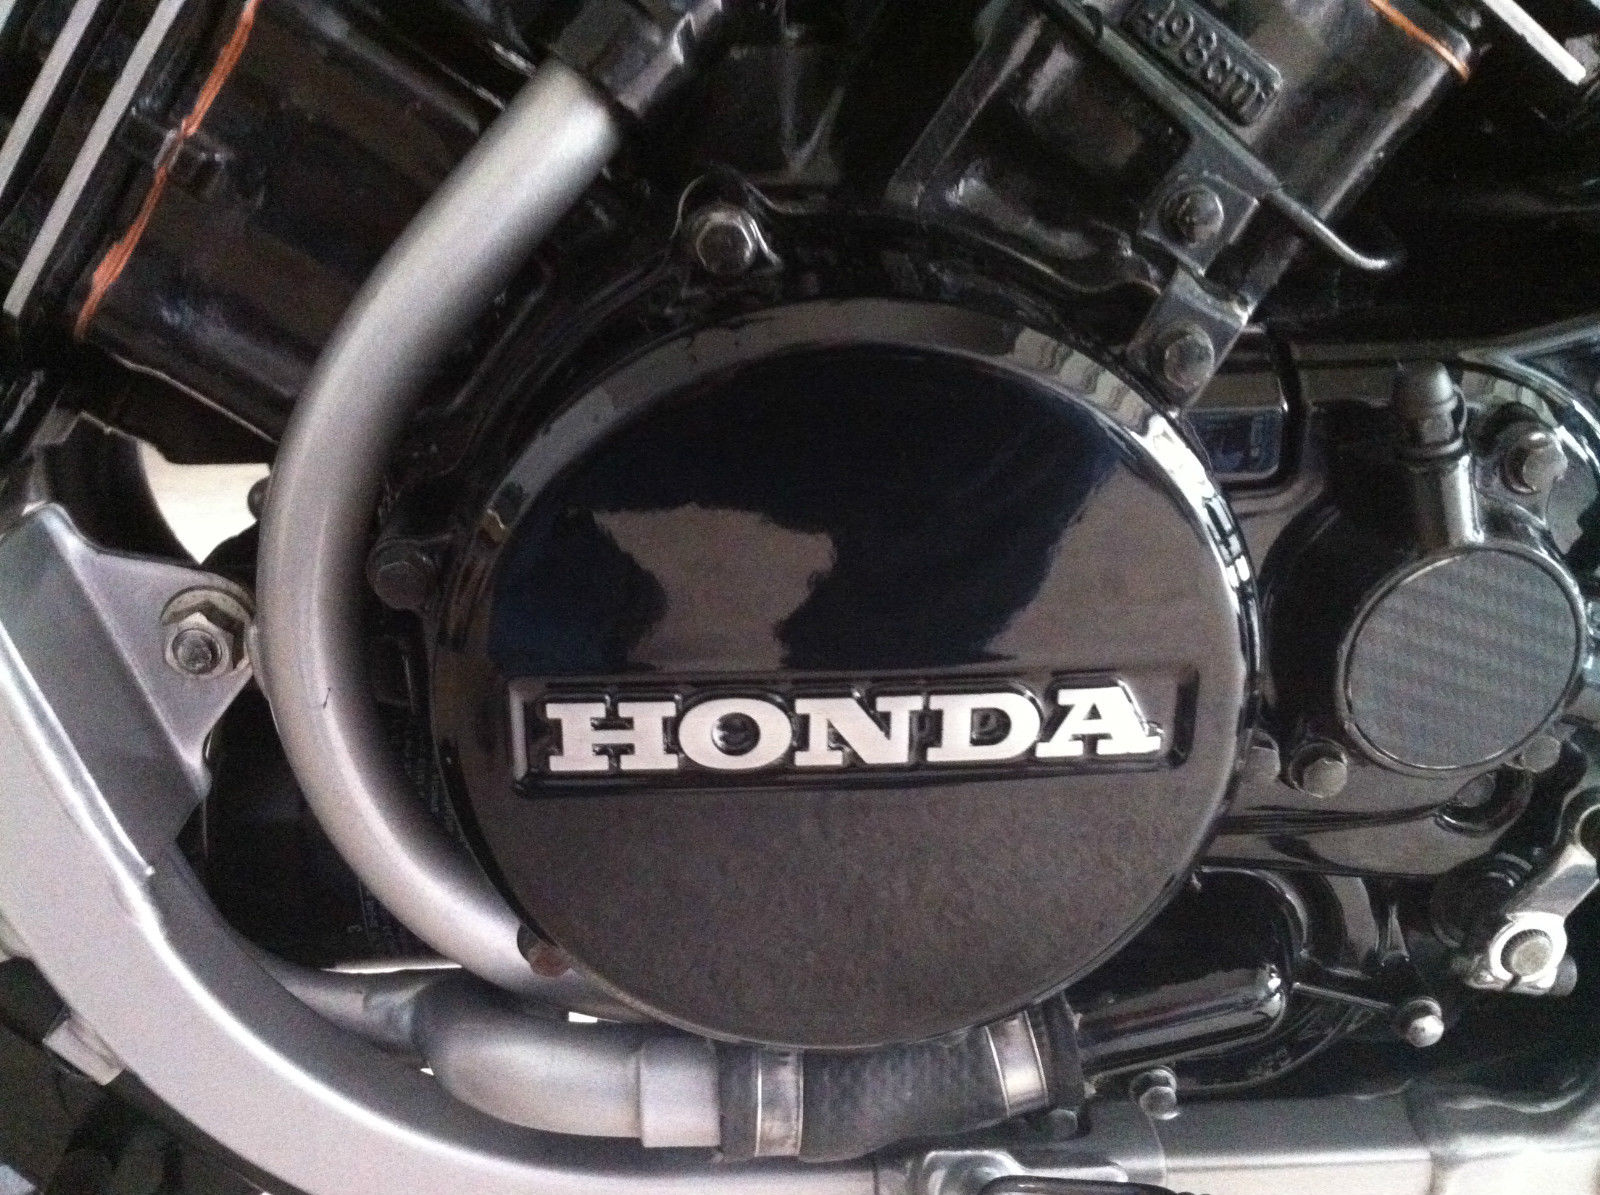 Honda vf500 interceptor review